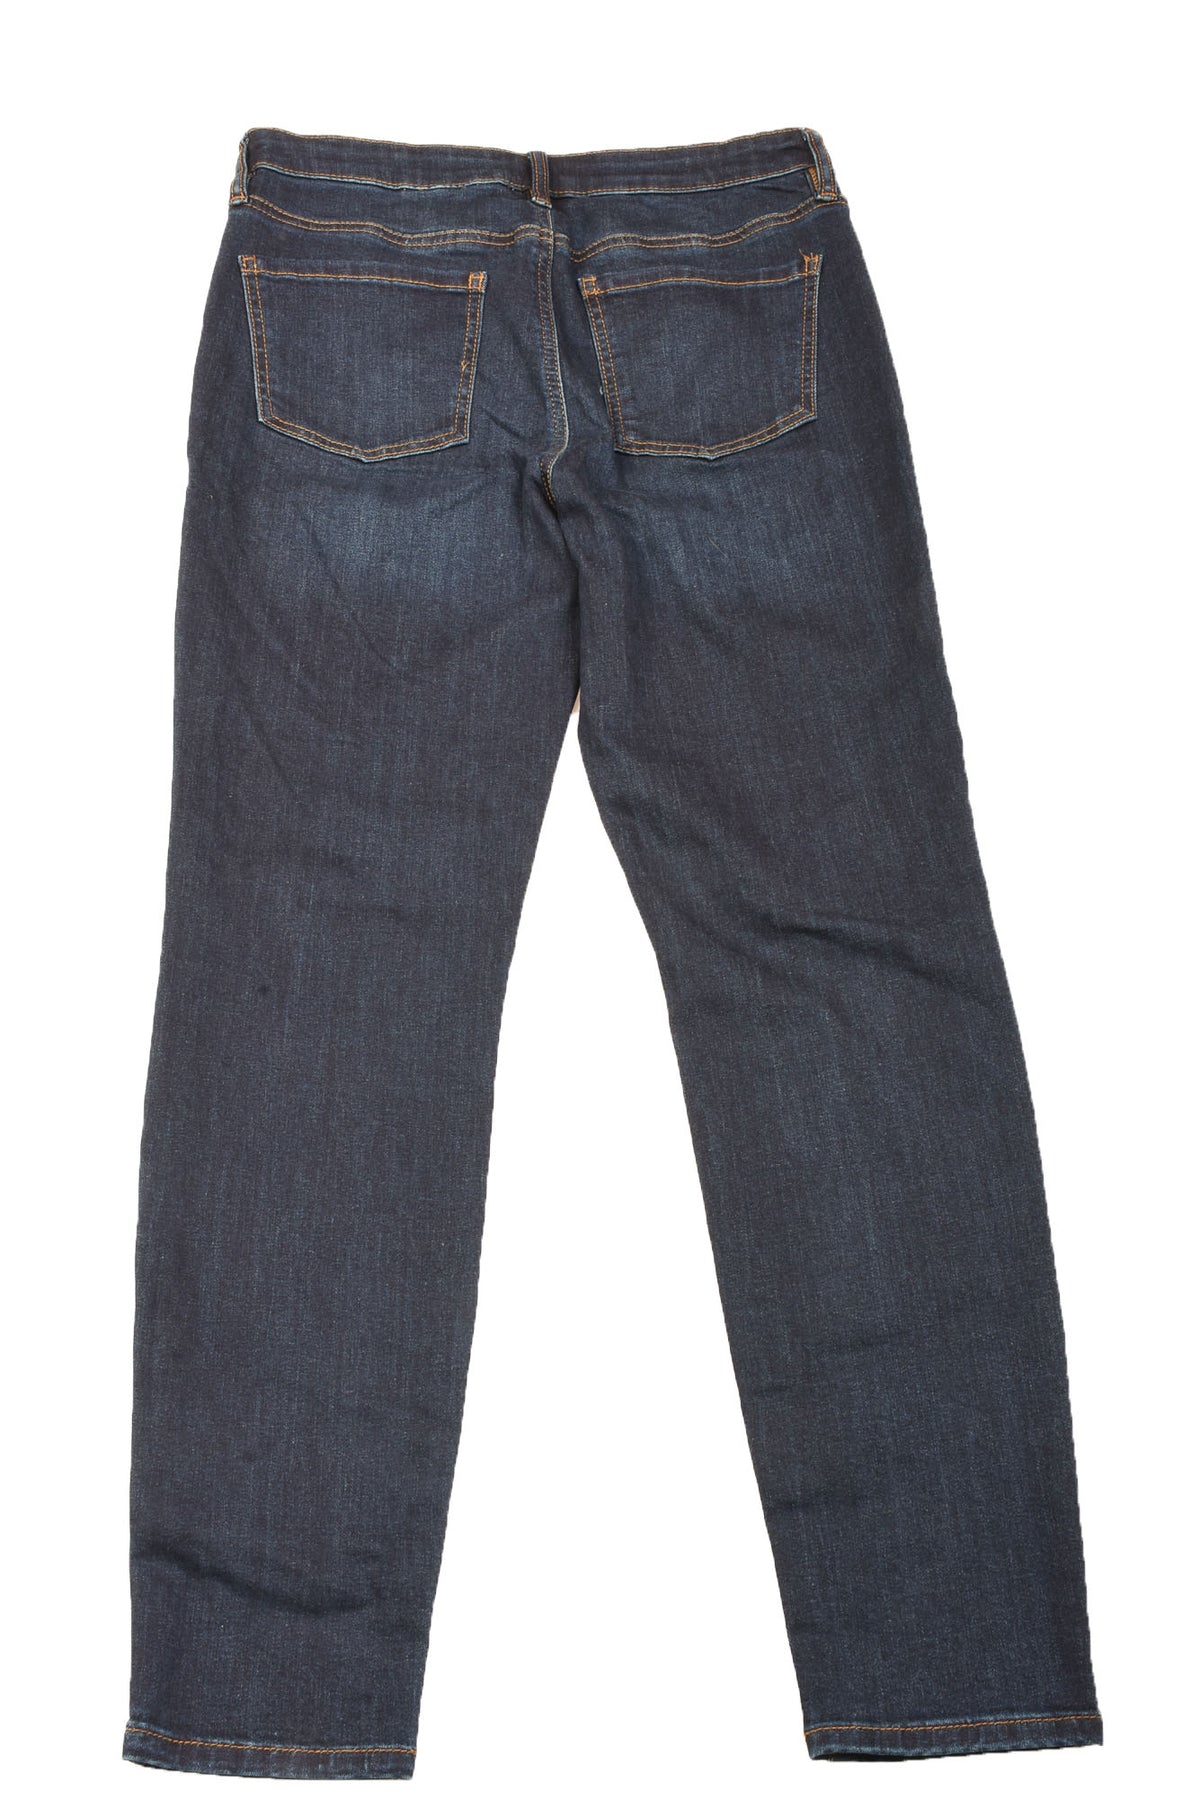 Buffalo David Bitton Size 4/27 Women&#39;s Jeans